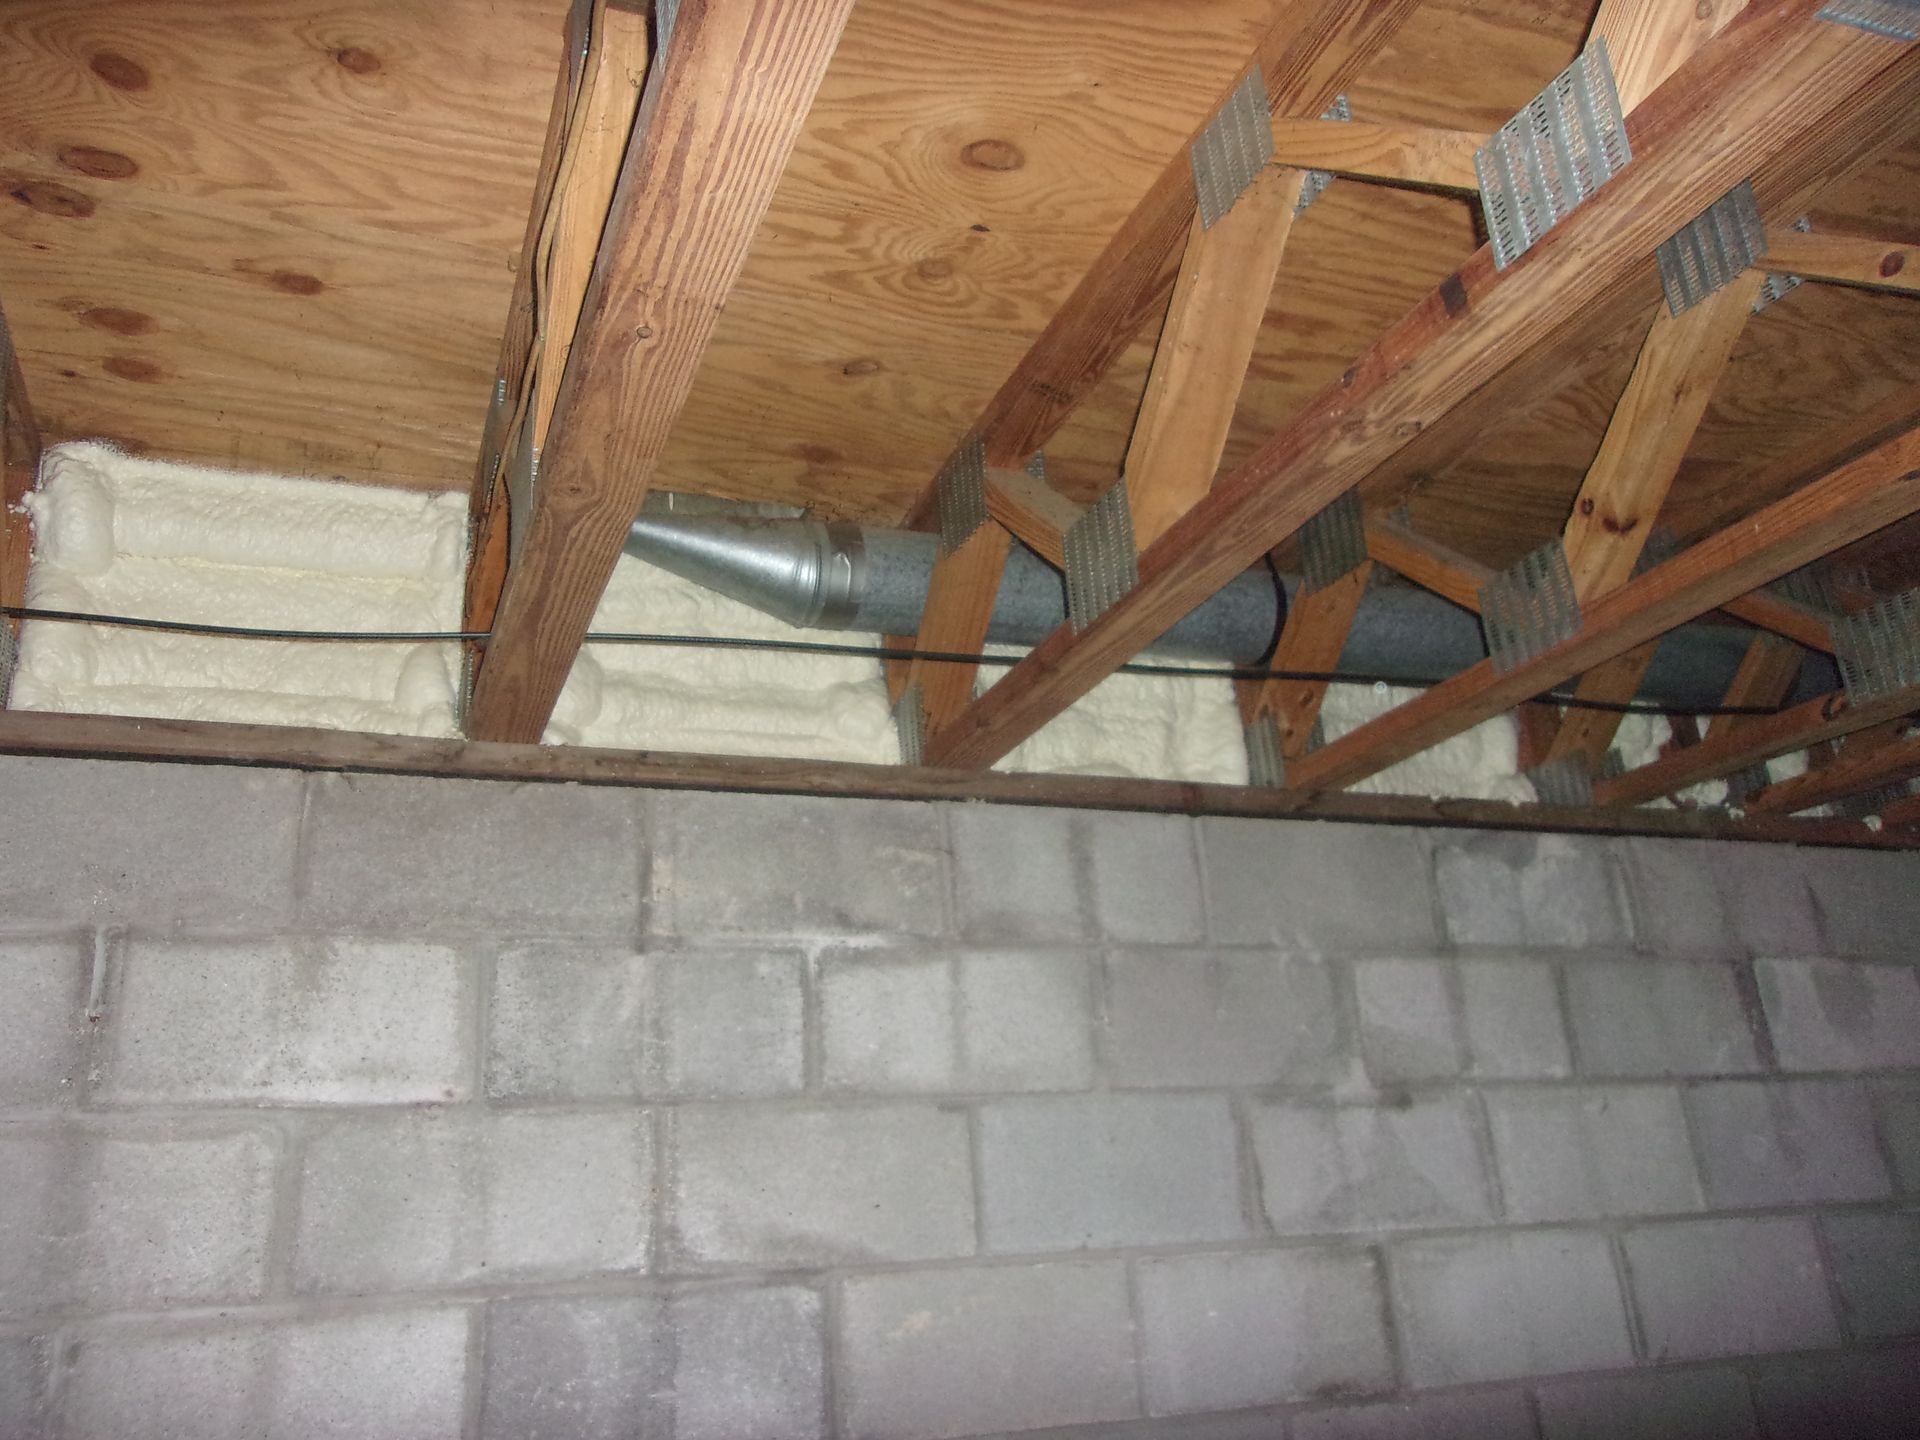 Spray foam insulation in the rim joists of a basement